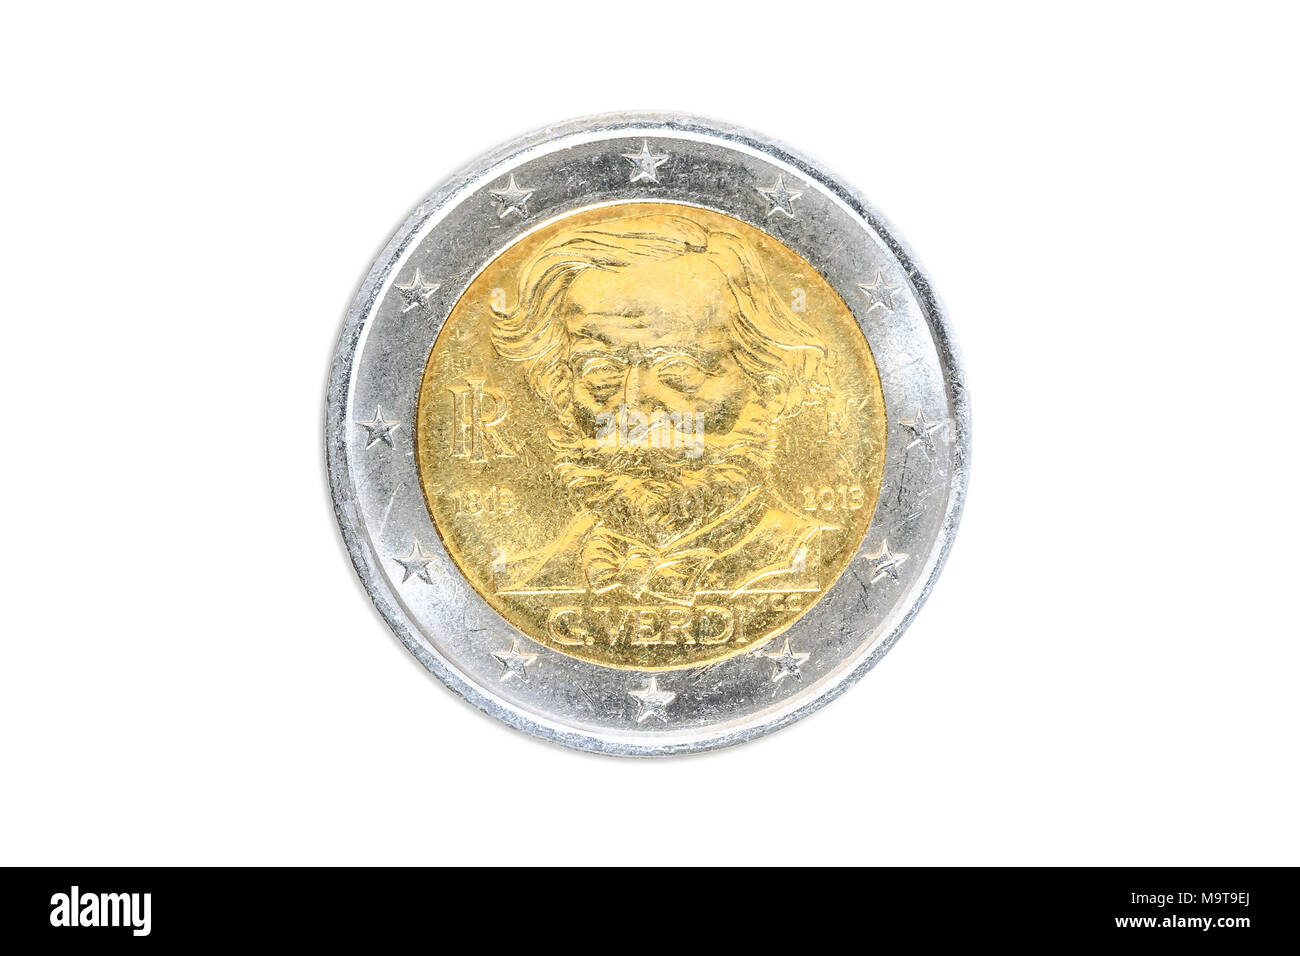 Italy coin of two euro closeup with head side of the famous Italian composer Giuseppe Verdi, artist of operas like La Traviata, Rigoletto, Va Pensiero and Aida. Isolated on white studio background. Stock Photo